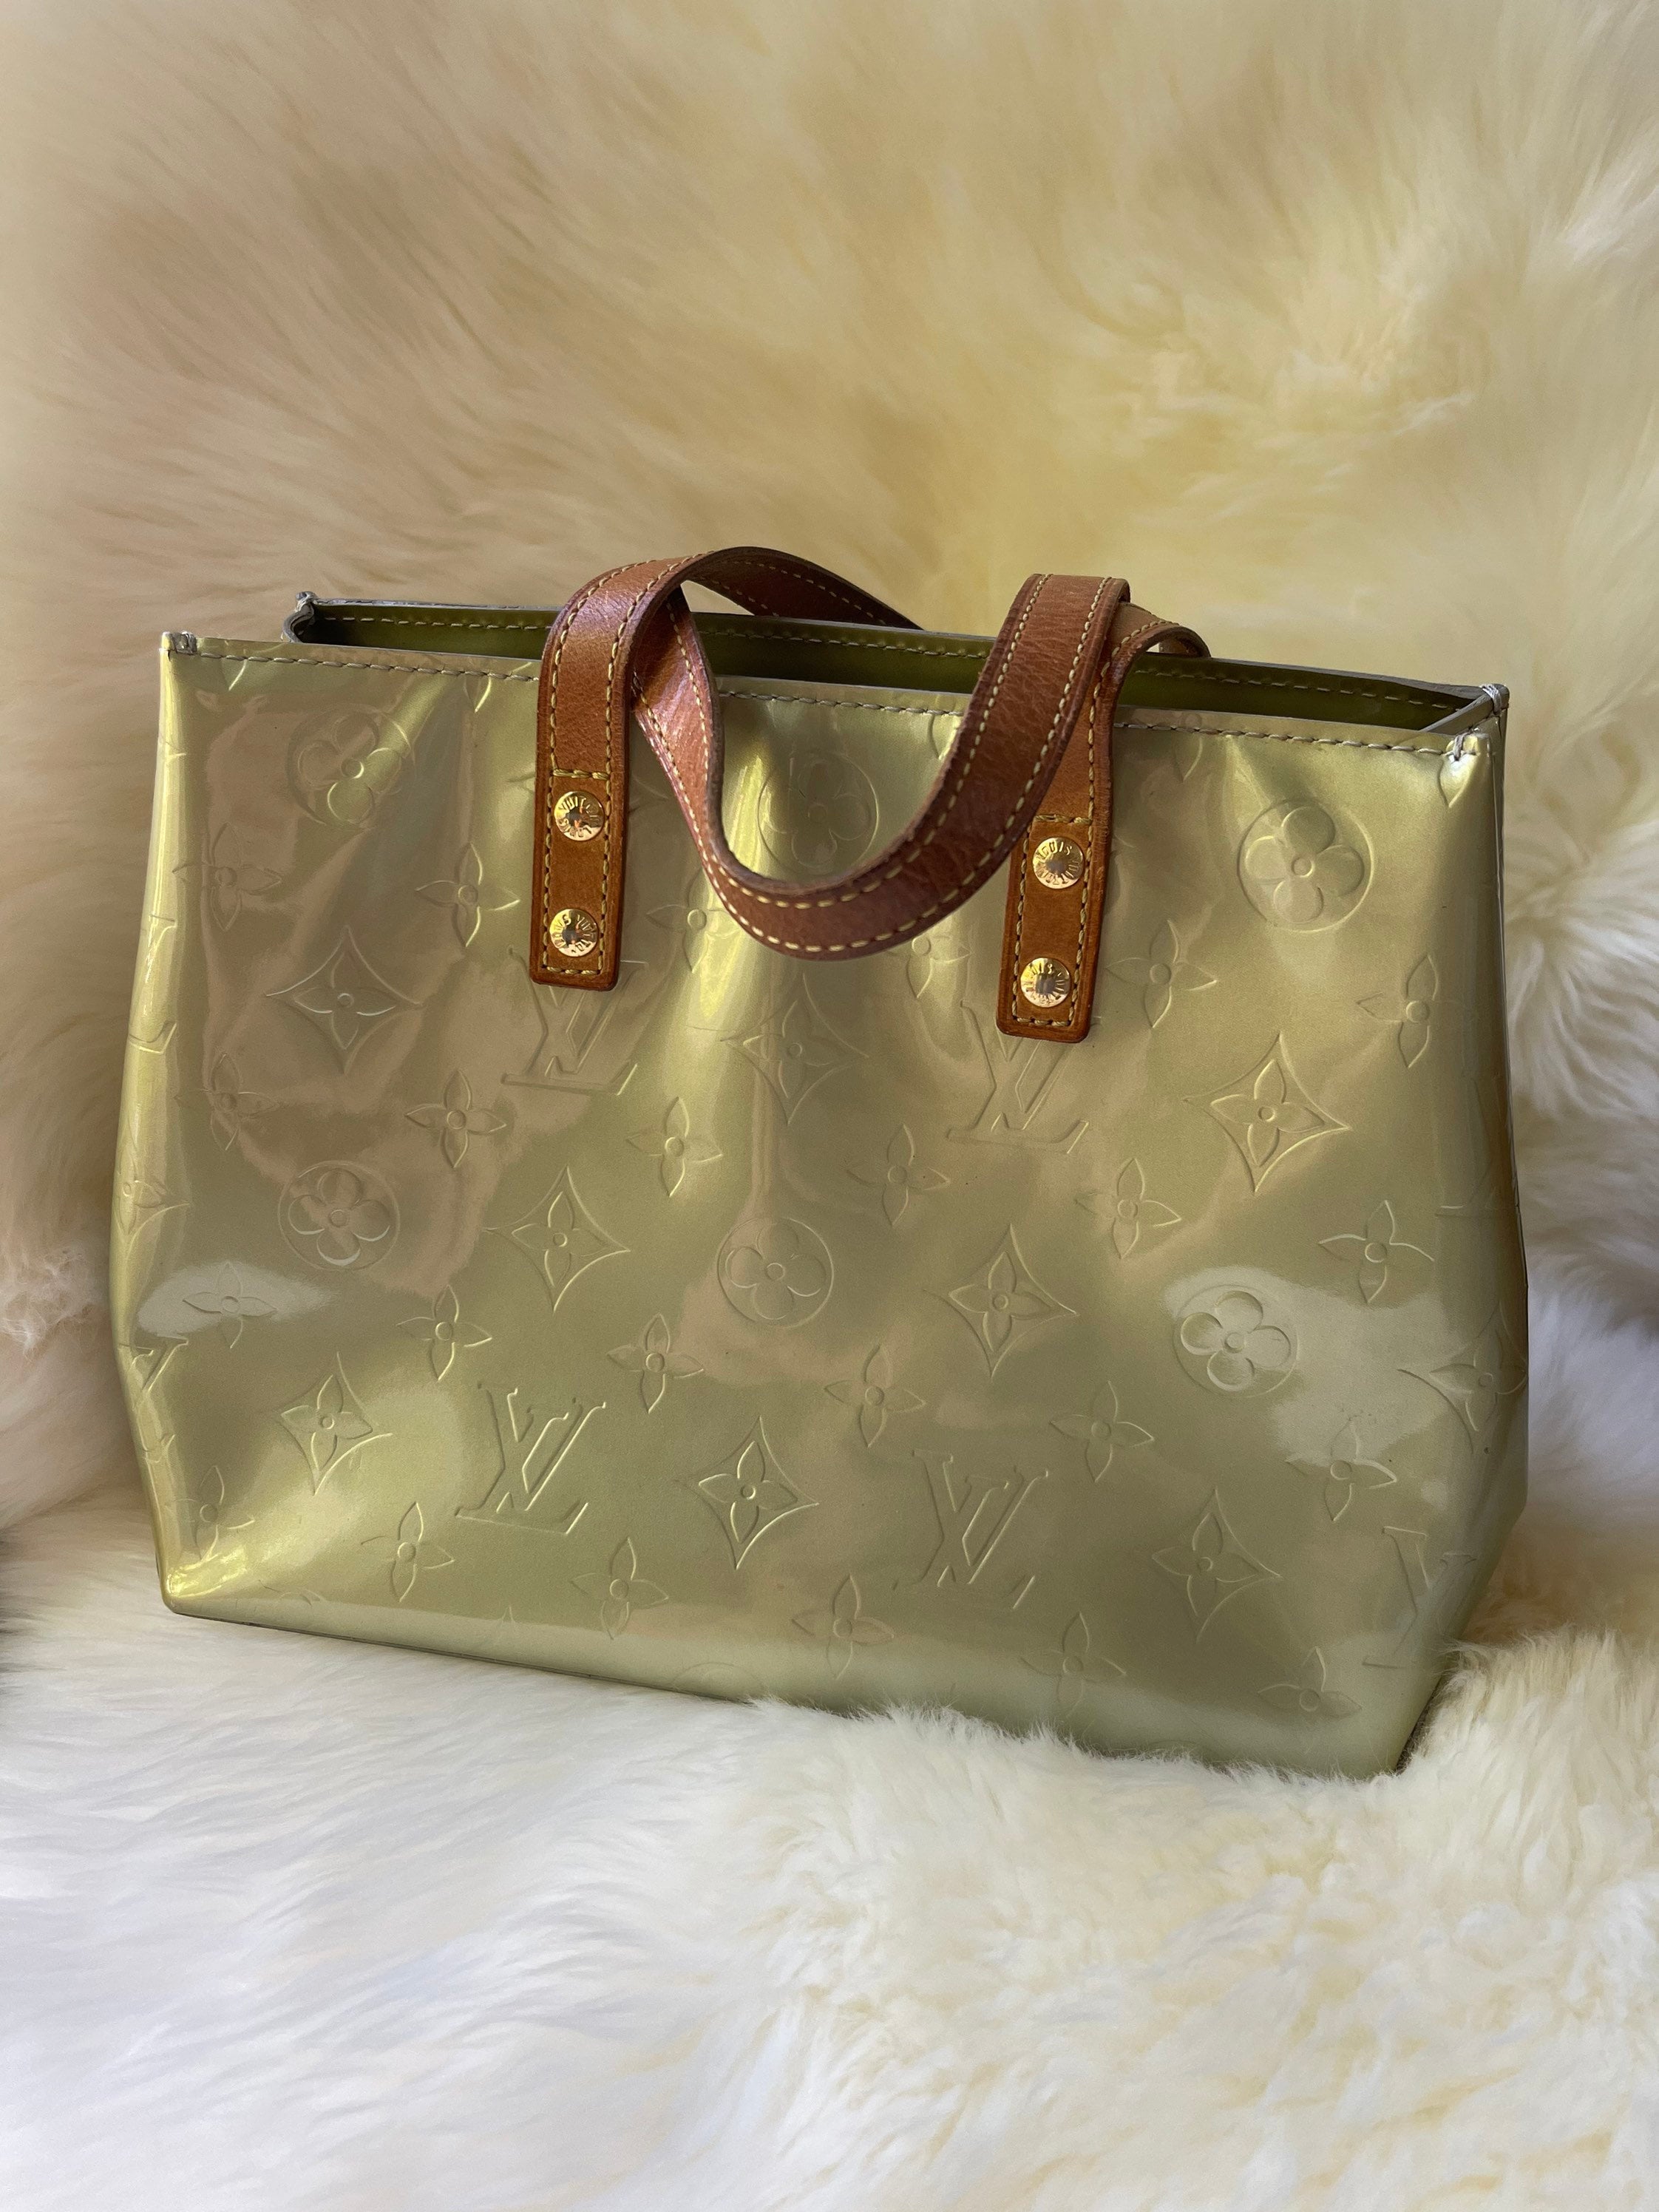 Louis Vuitton Green Monogram Vernis Reade MM Tote Bag 93lv98